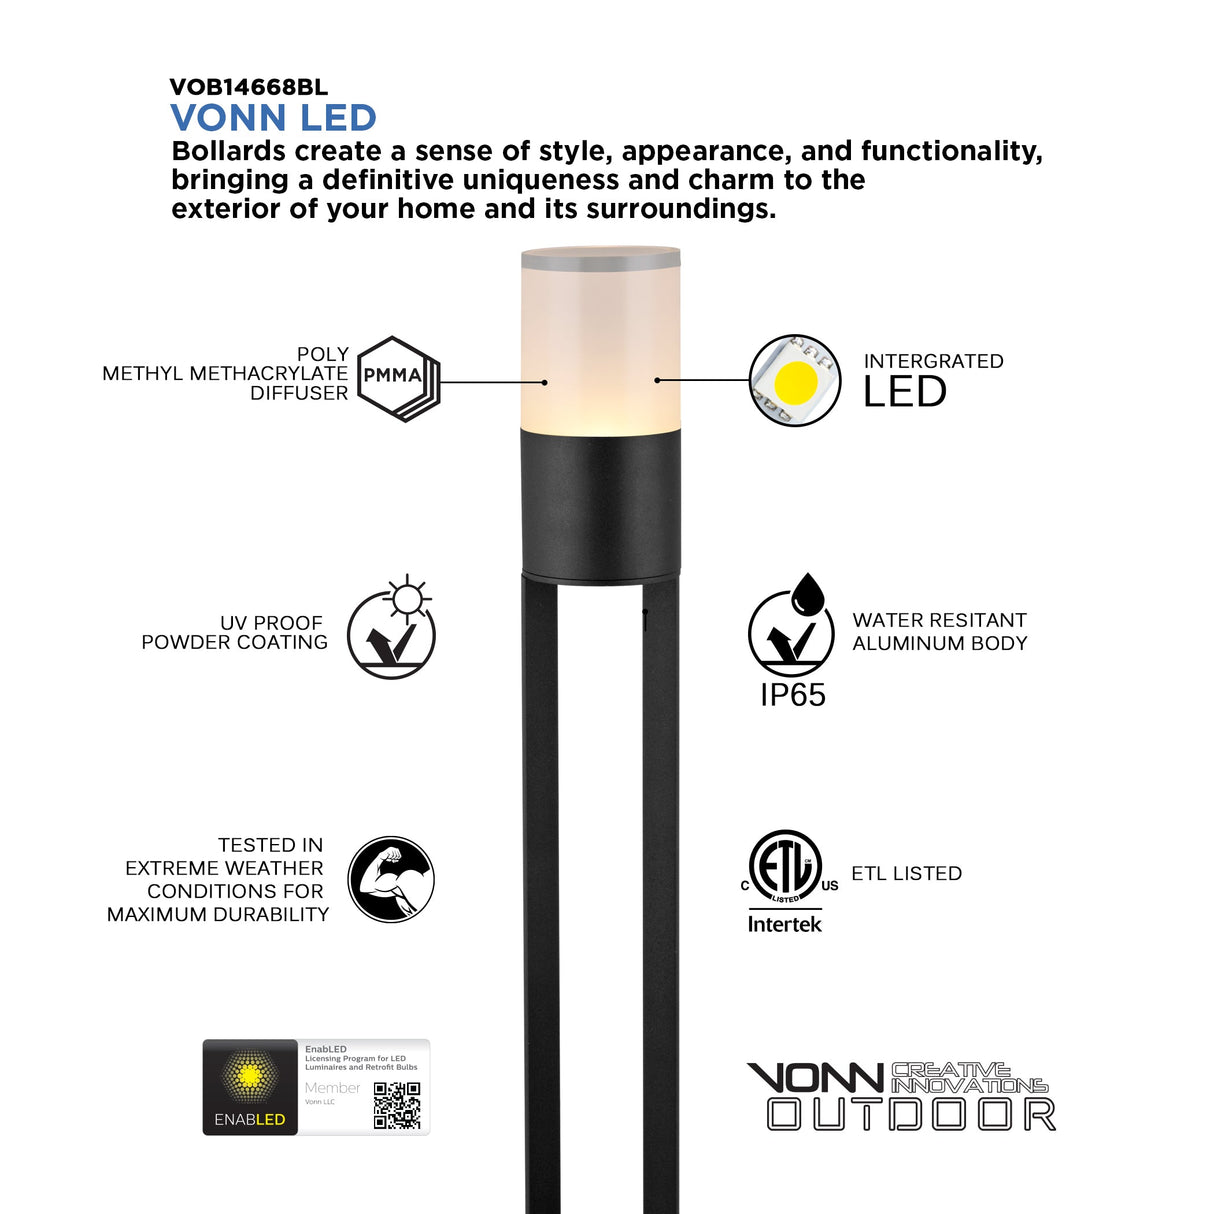 VONN 32" Modern VOB14668BL Low-Voltage 6-Watt ETL Certified Integrated LED Outdoor Bollard in Matte Black